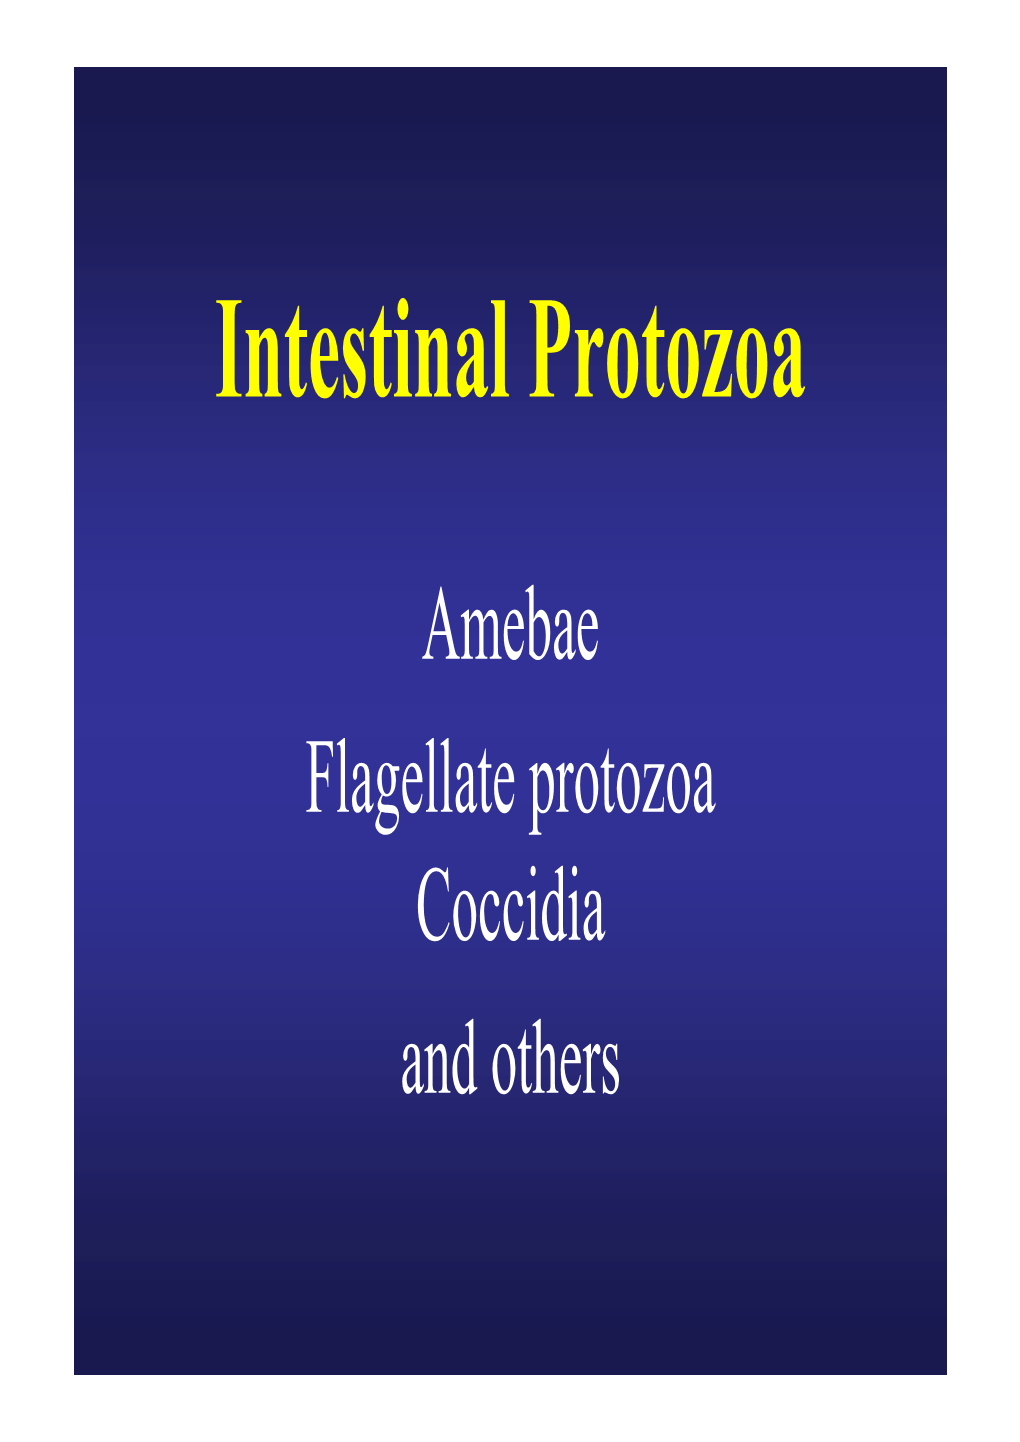 Intestinal-Protozoa.Pdf